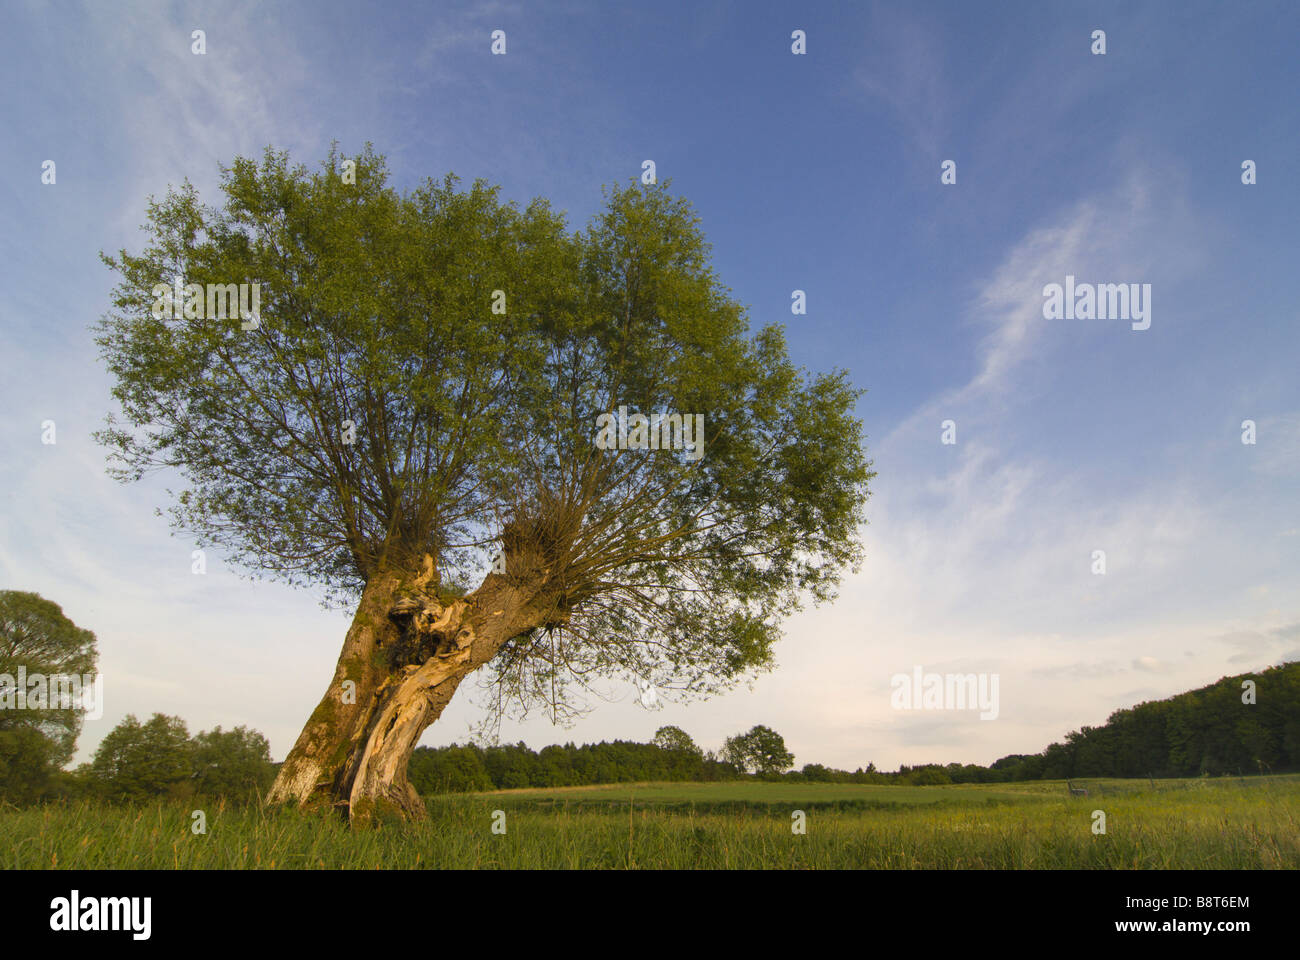 common osier (Salix viminalis), old tree with fresh green foliage in spring, Germany, Rhineland-Palatinate Stock Photo